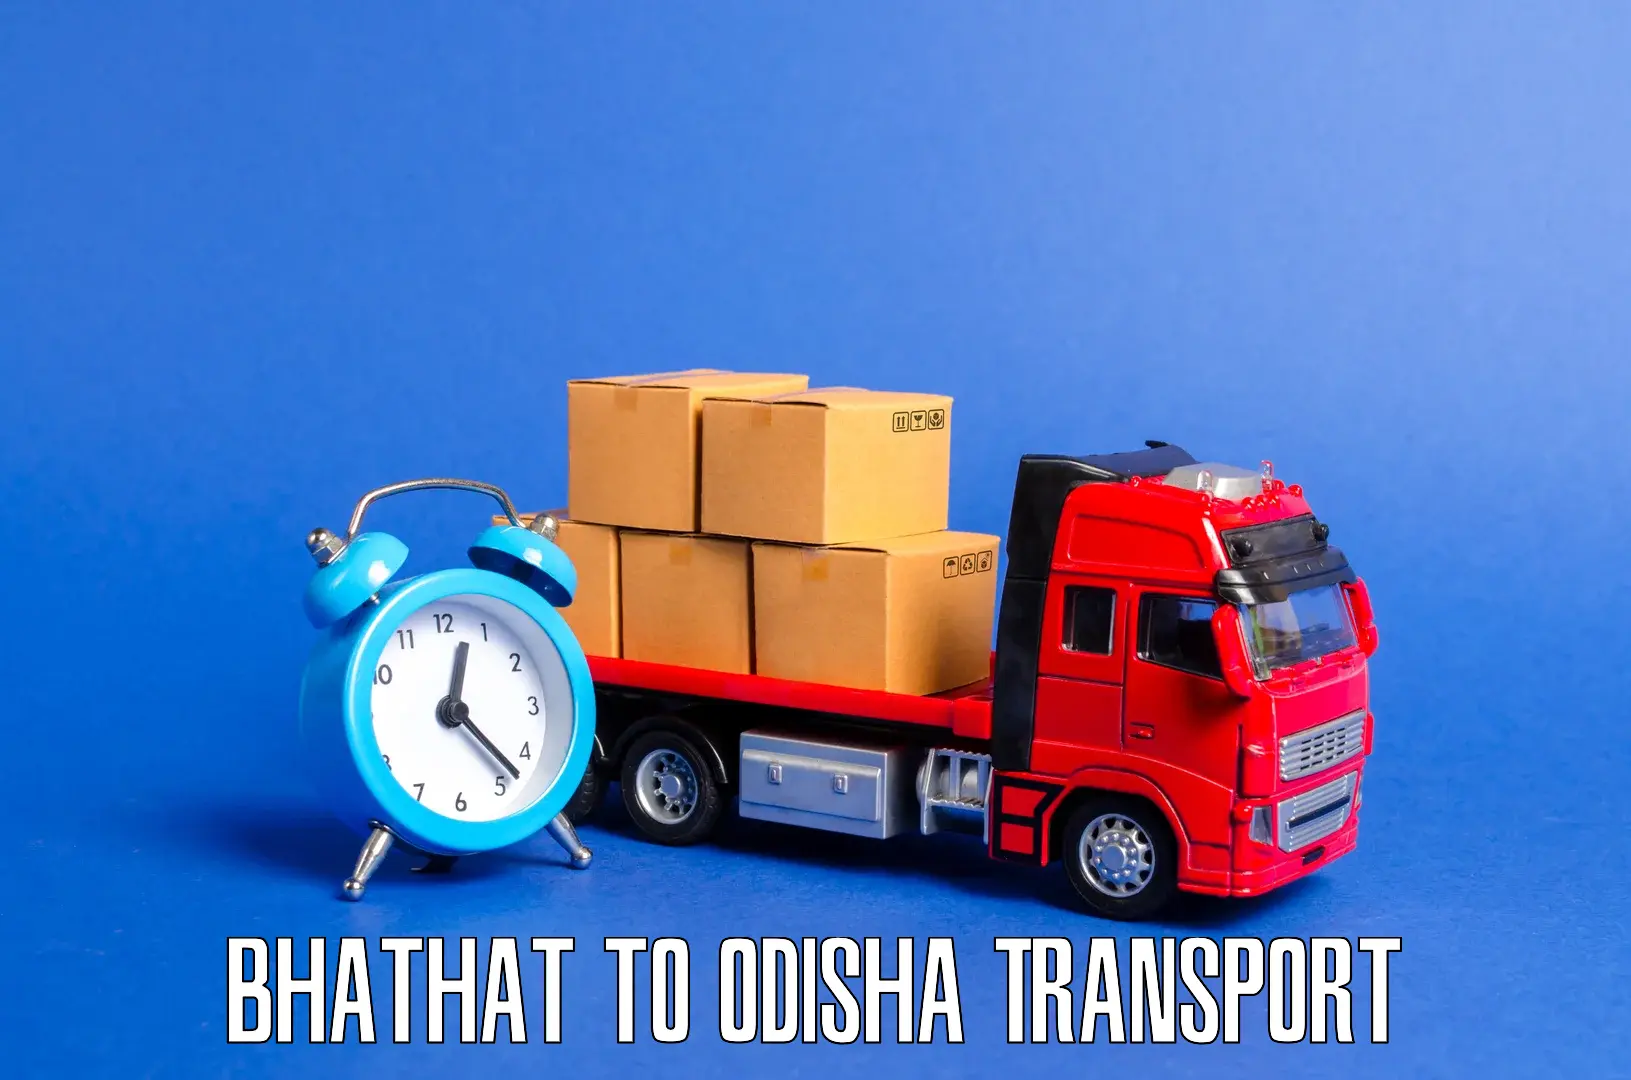 Truck transport companies in India Bhathat to Rairangpur